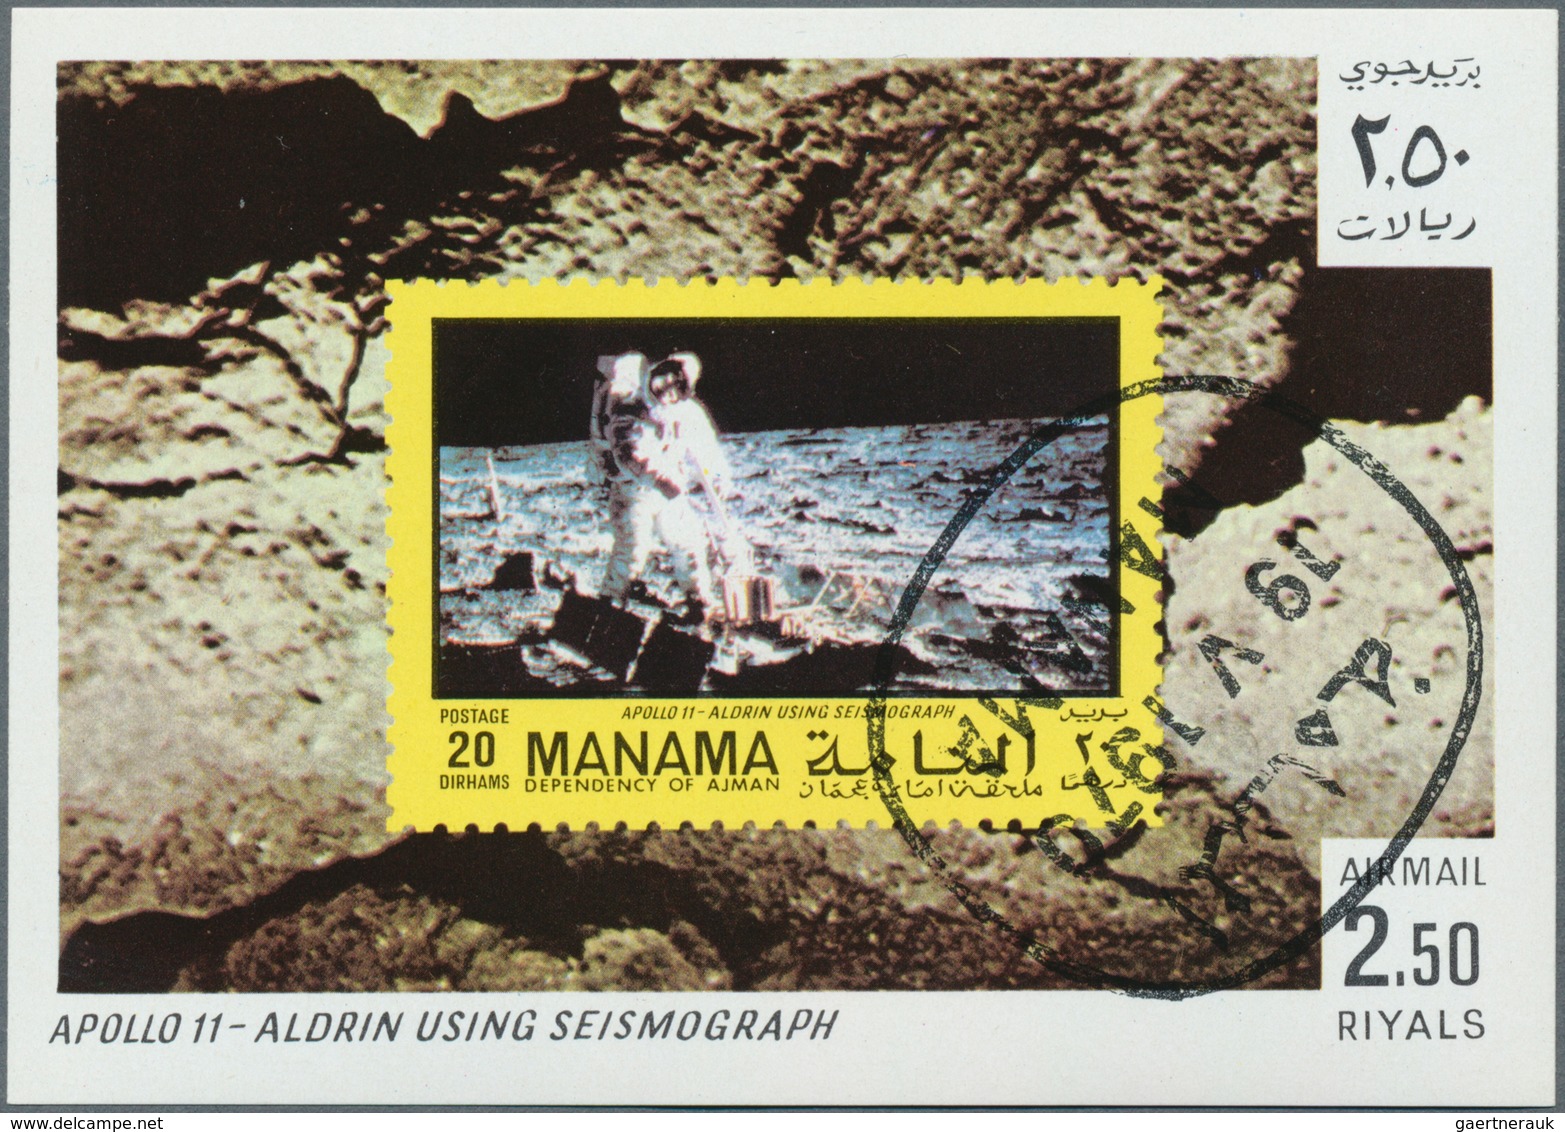 22075 Adschman - Manama / Ajman - Manama: 1970, SPACE RESEARCH 'Apollo moon landing' 15 different imperfor